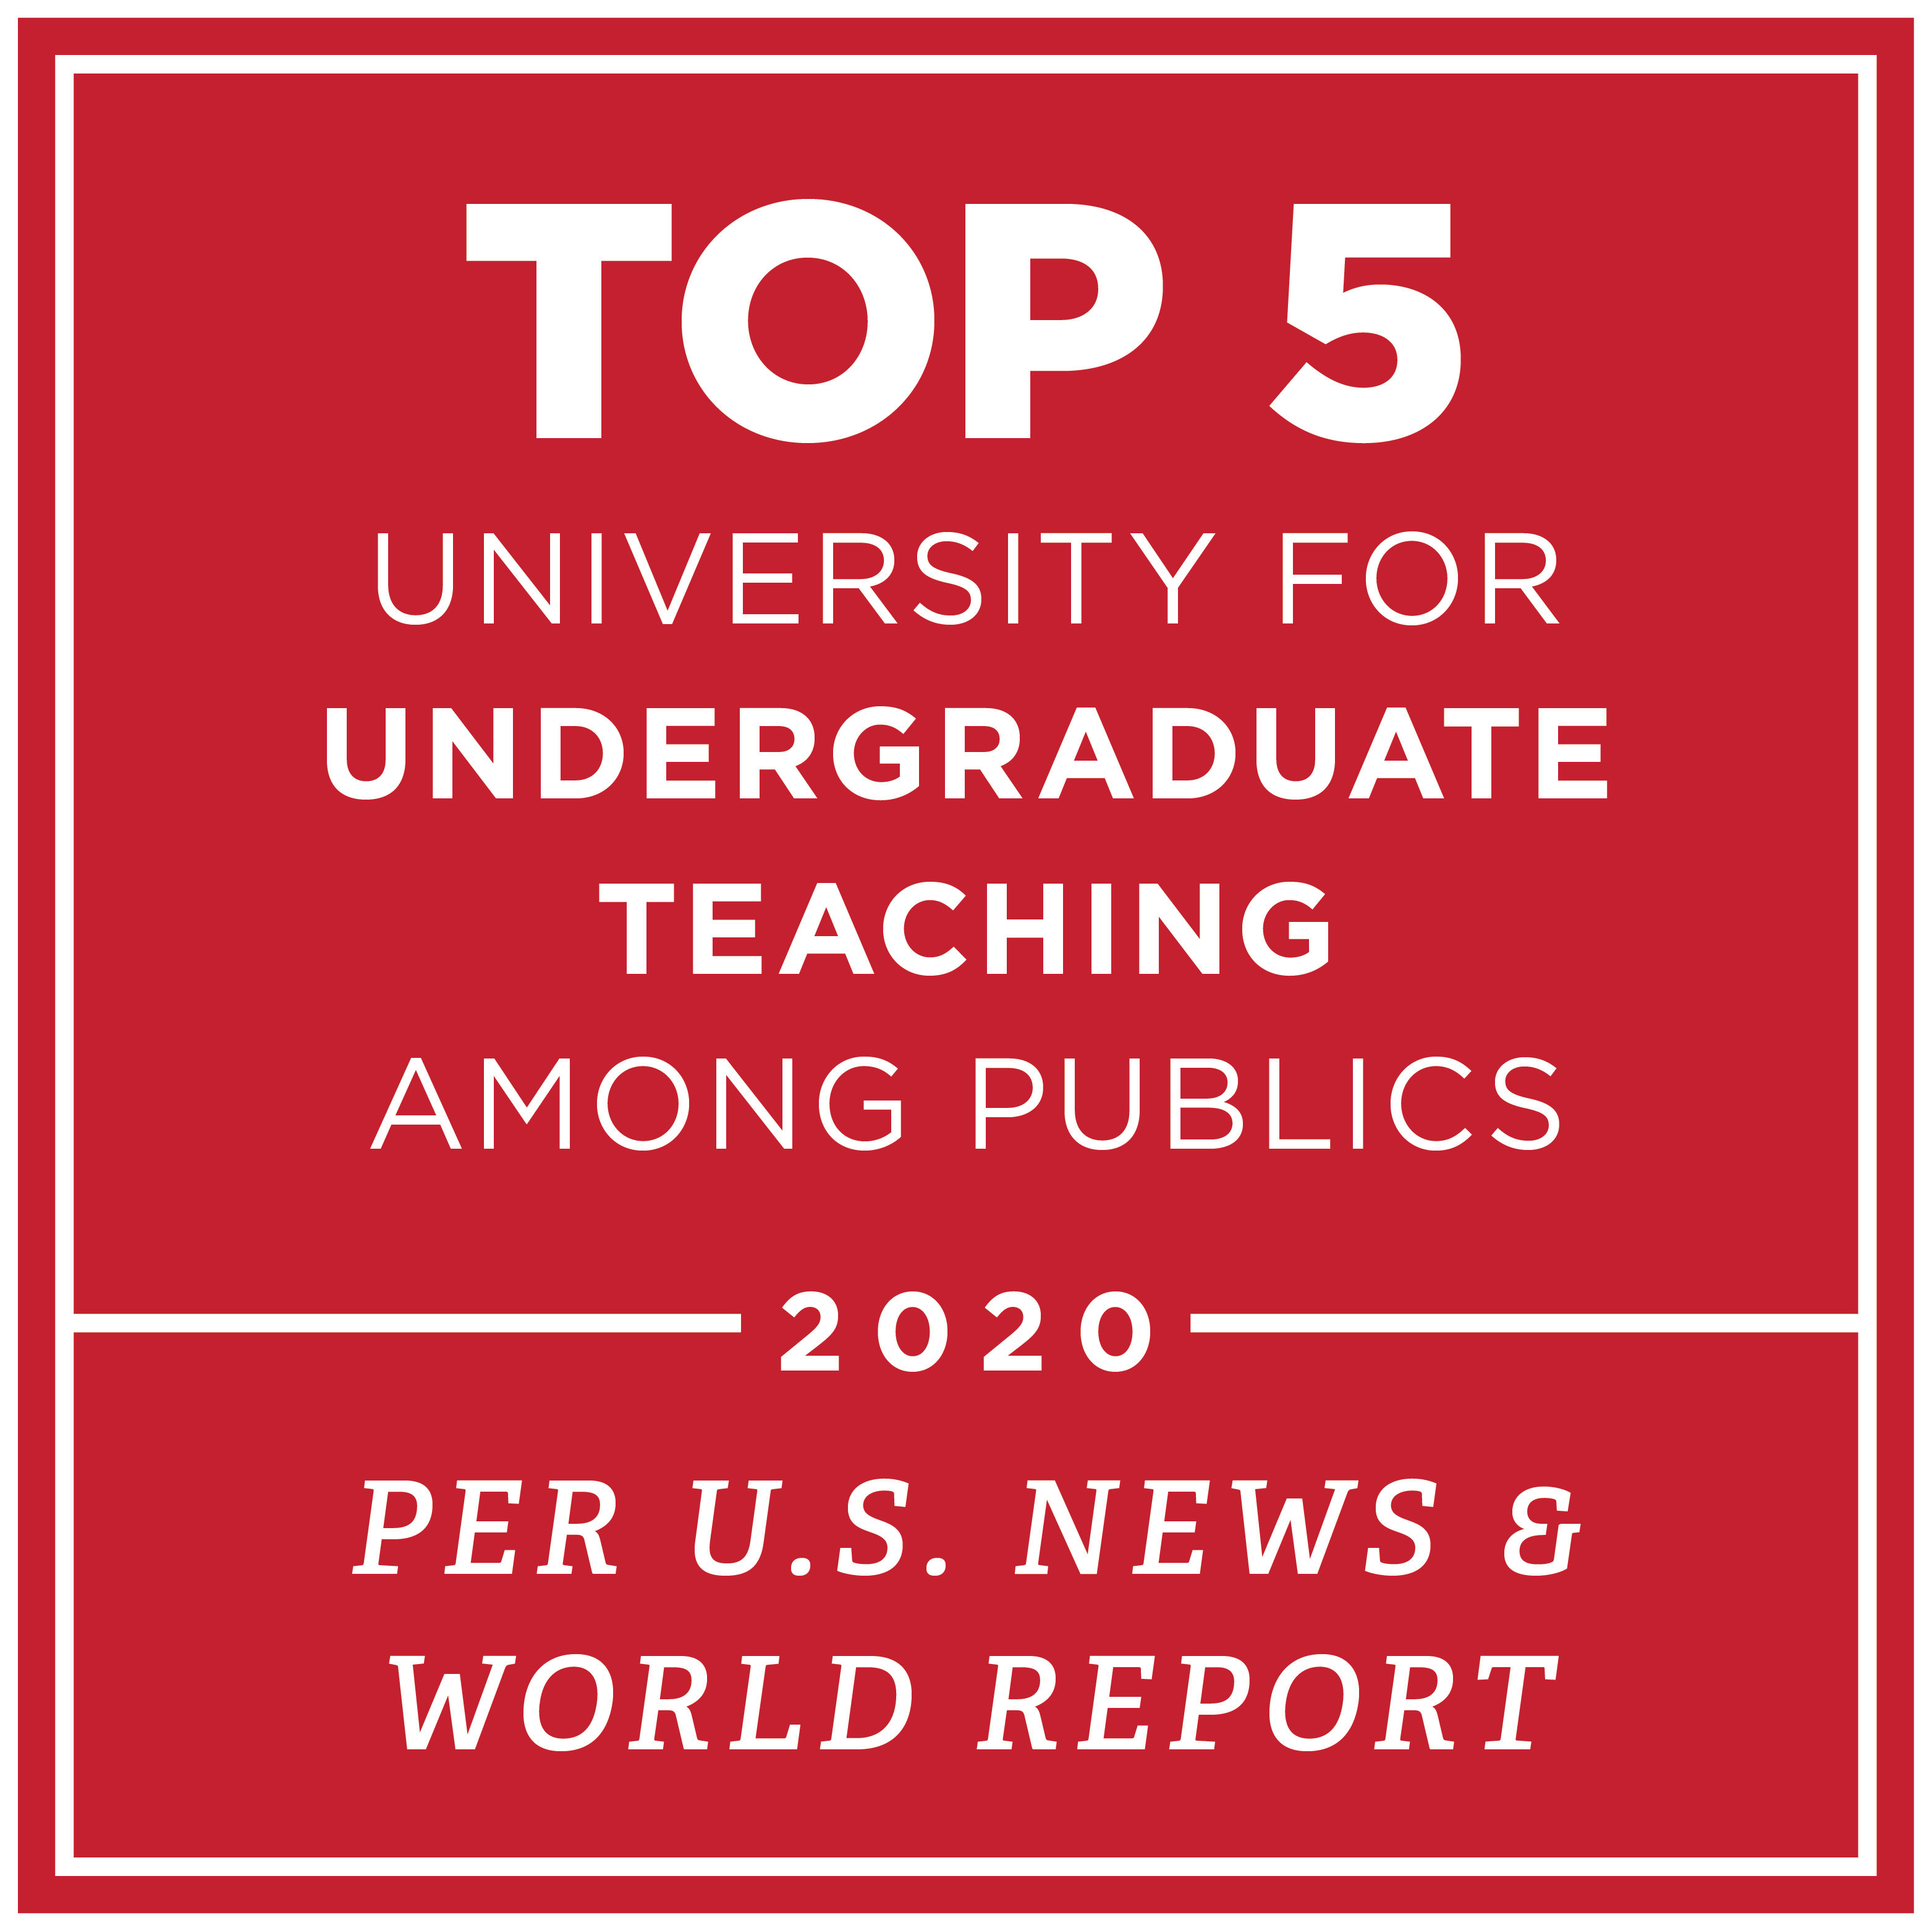 Top 5 university for undergraduate teaching among publics 2020, per U.S. News and World Report